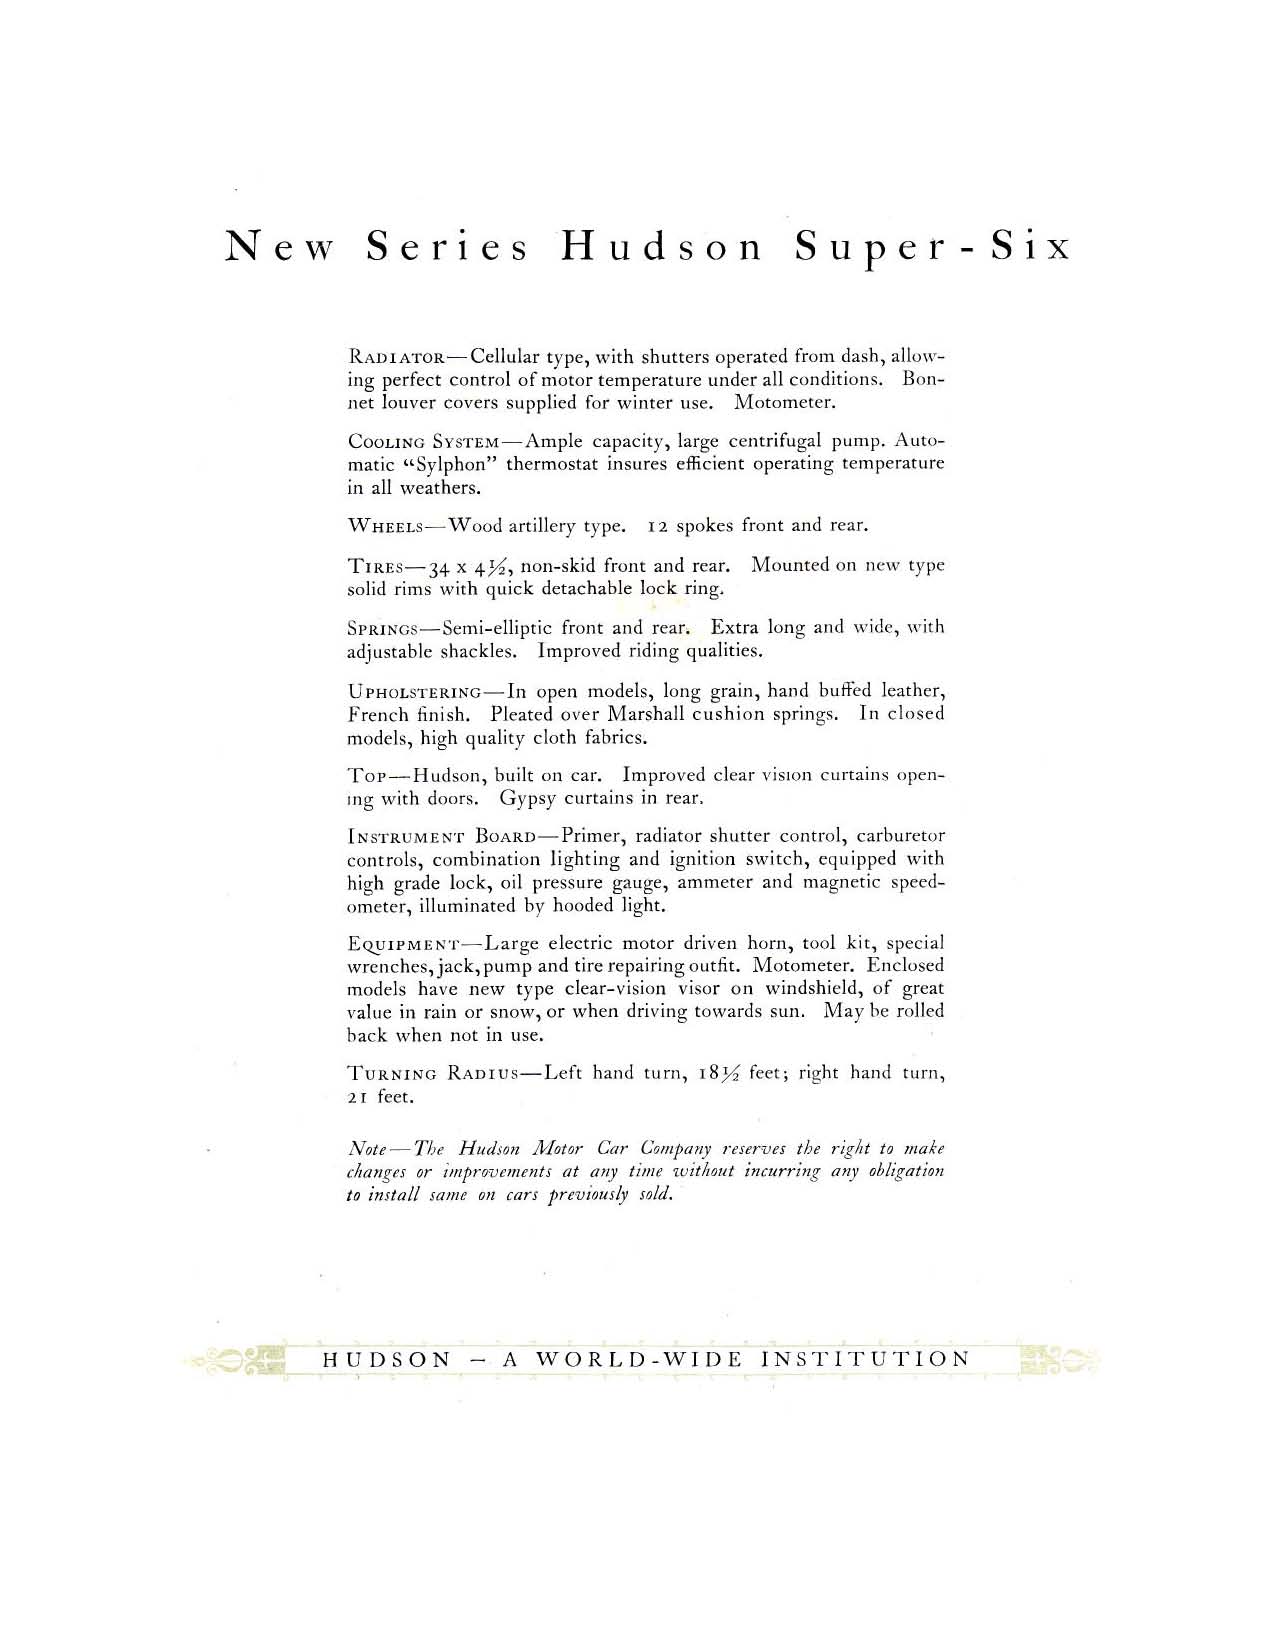 1919 Hudson Super-Six Brochure Page 4